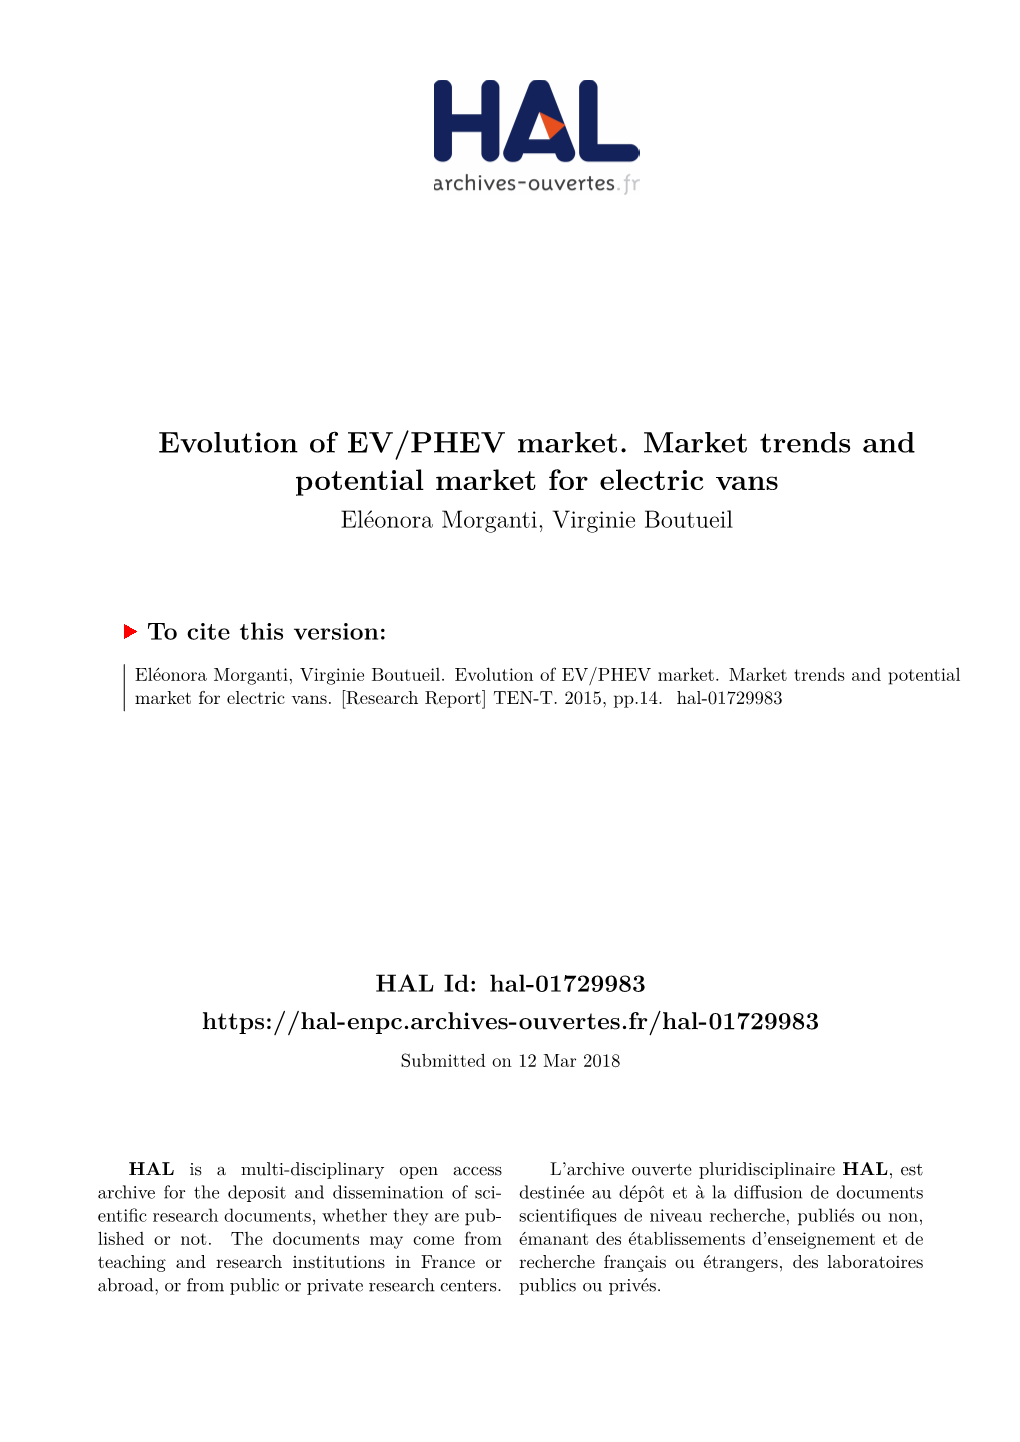 Evolution of EV/PHEV Market. Market Trends and Potential Market for Electric Vans Eléonora Morganti, Virginie Boutueil